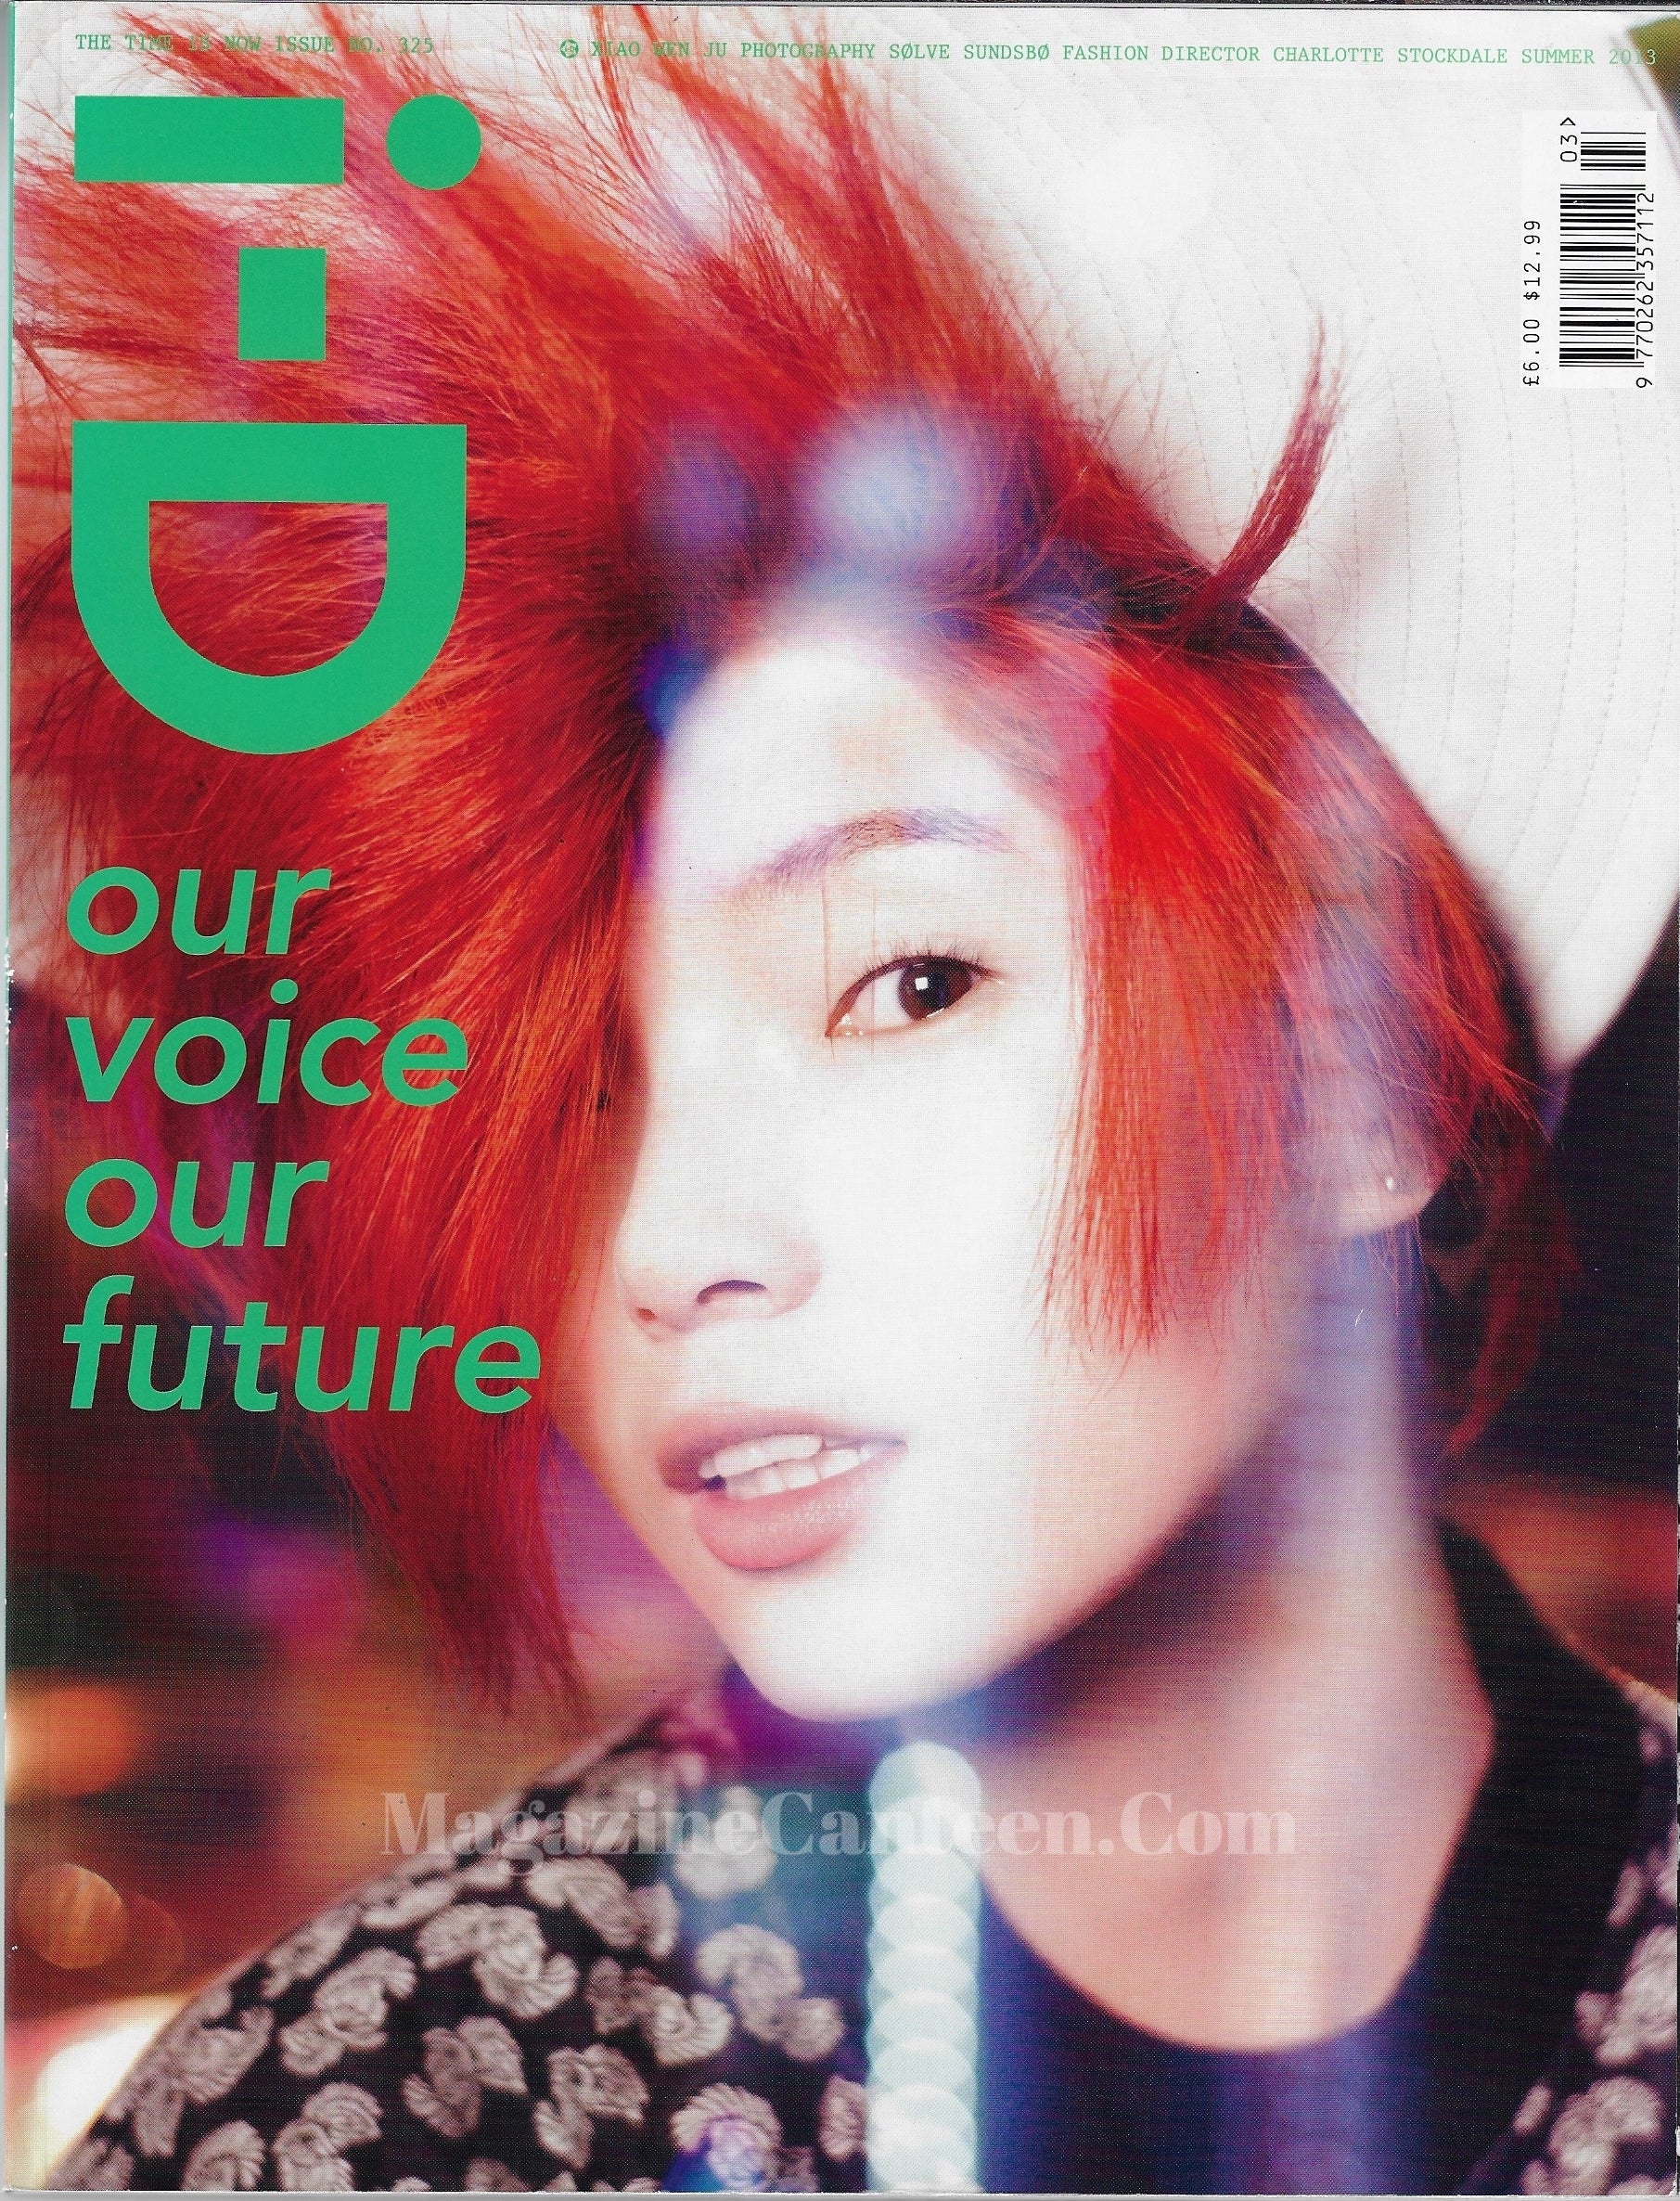 I-D Magazine 325 - Klao Wen Ju 2013